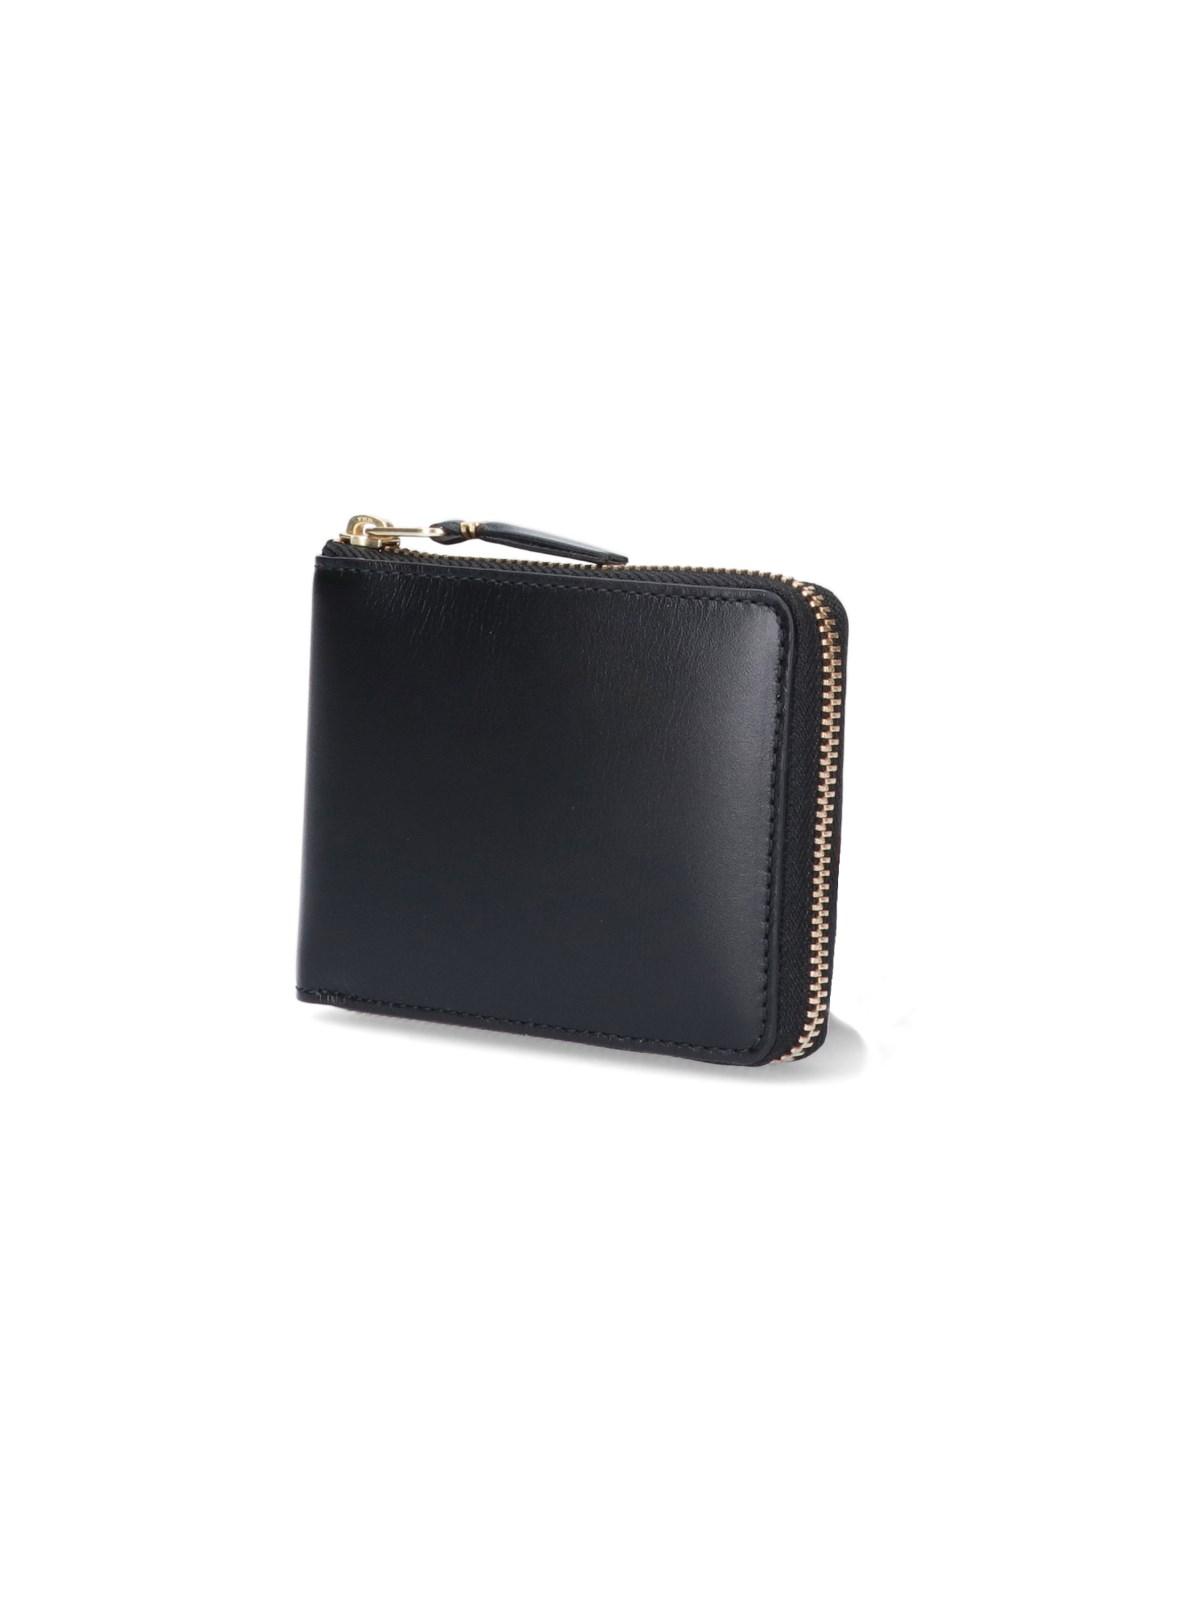 Comme des Garçons Classic Zip-around Wallet in Black | Lyst